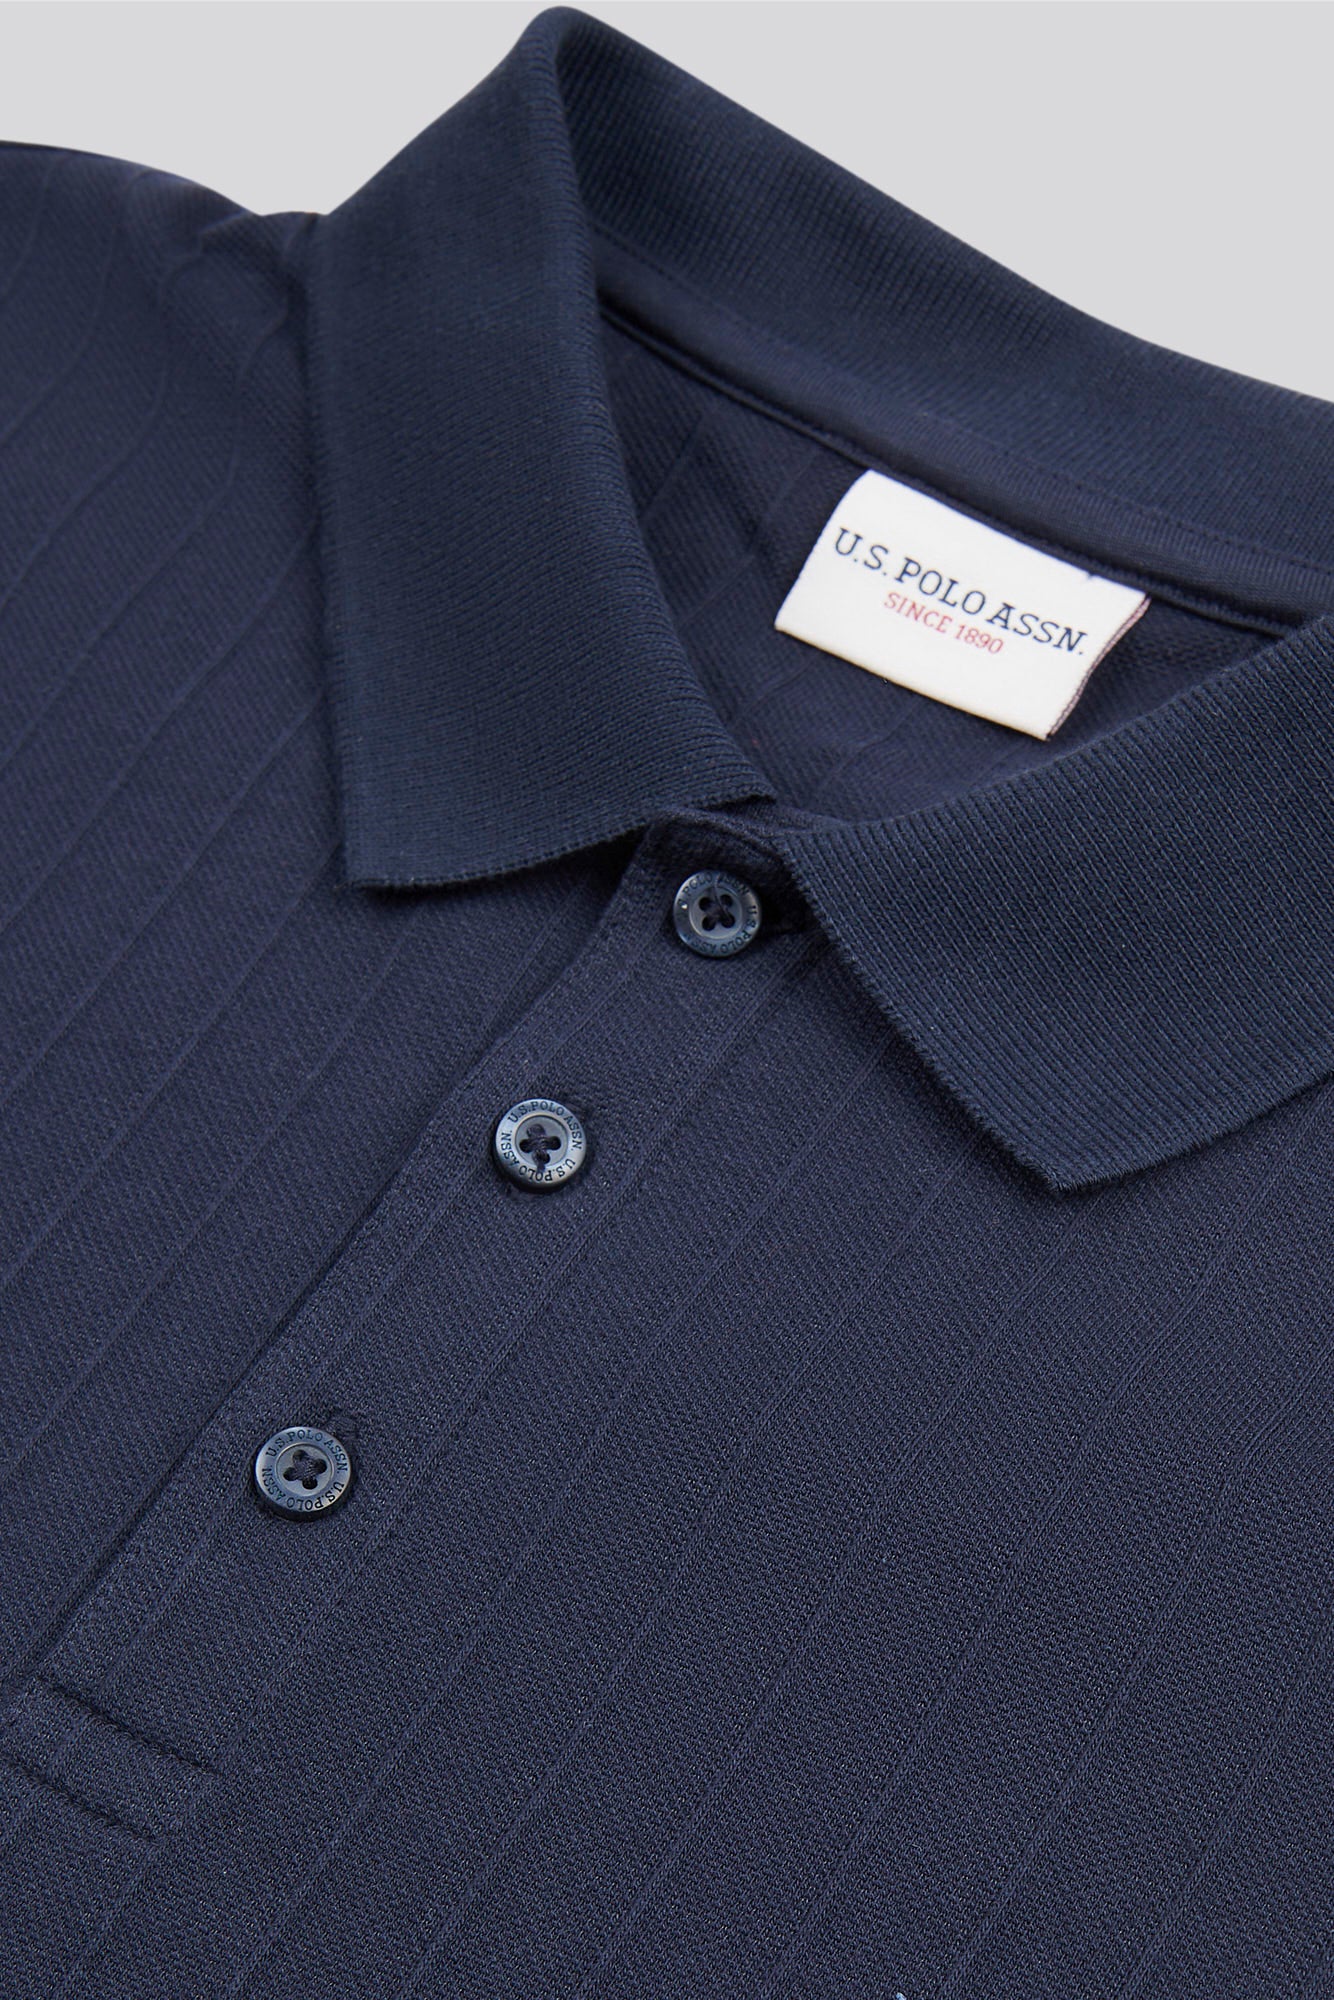 Mens Regular Fit Vertical Texture Polo Shirt in Dark Sapphire Navy / Moonlight Blue DHM